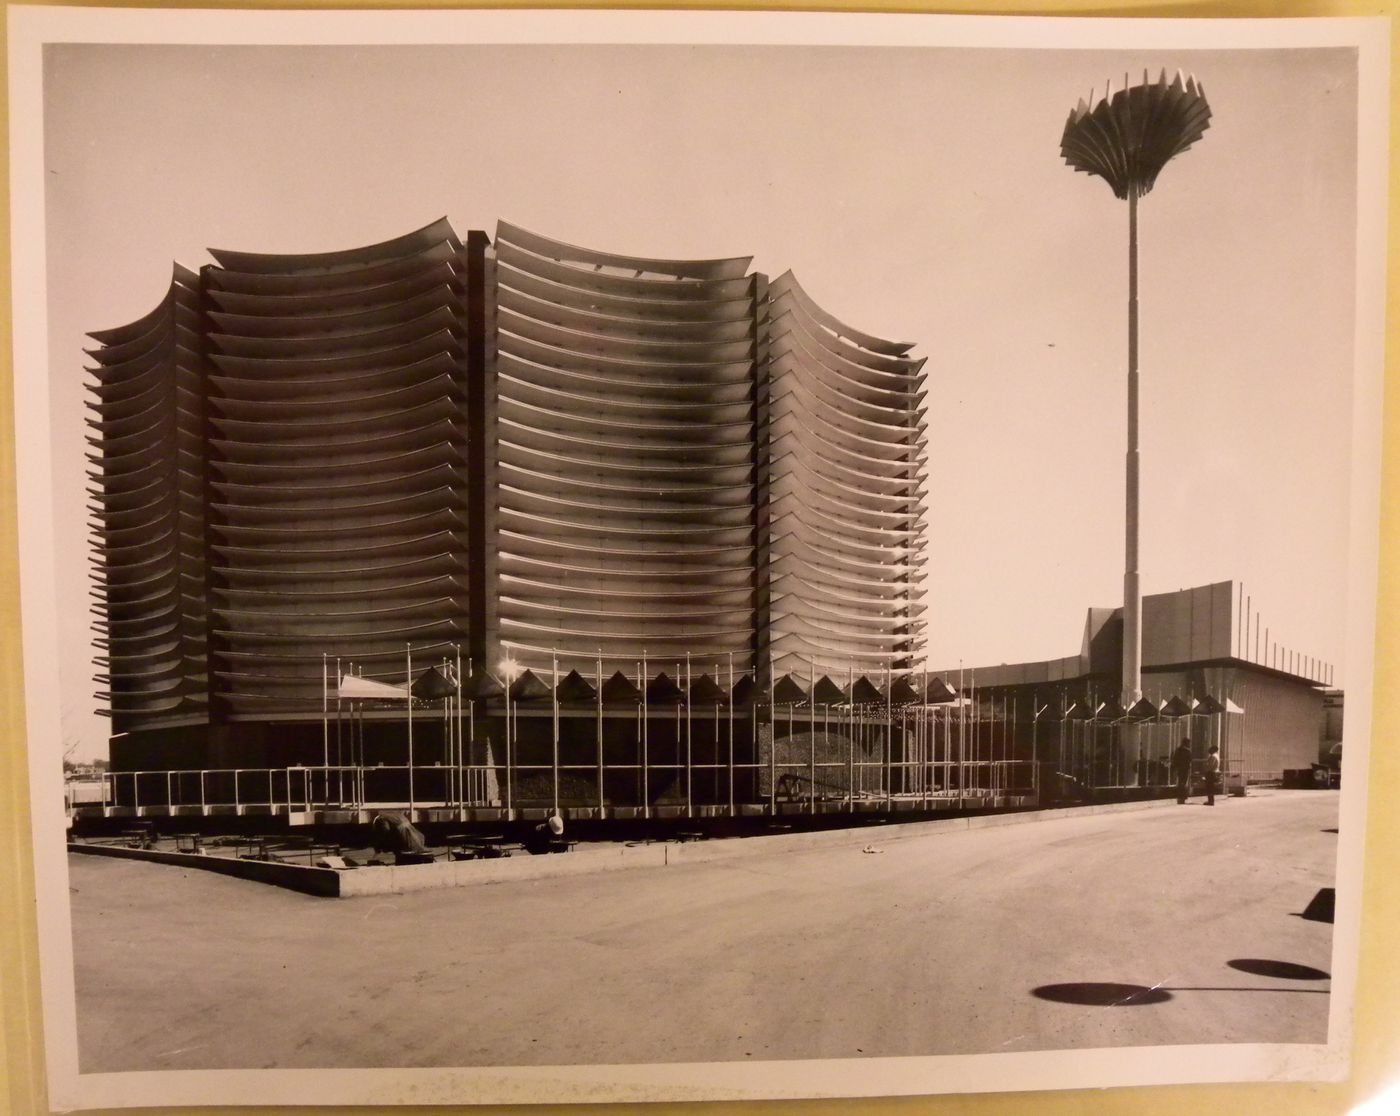 View of the Canadian Pacific-Cominco Pavilion at its final construction stage, Expo 67, Montréal, Québec